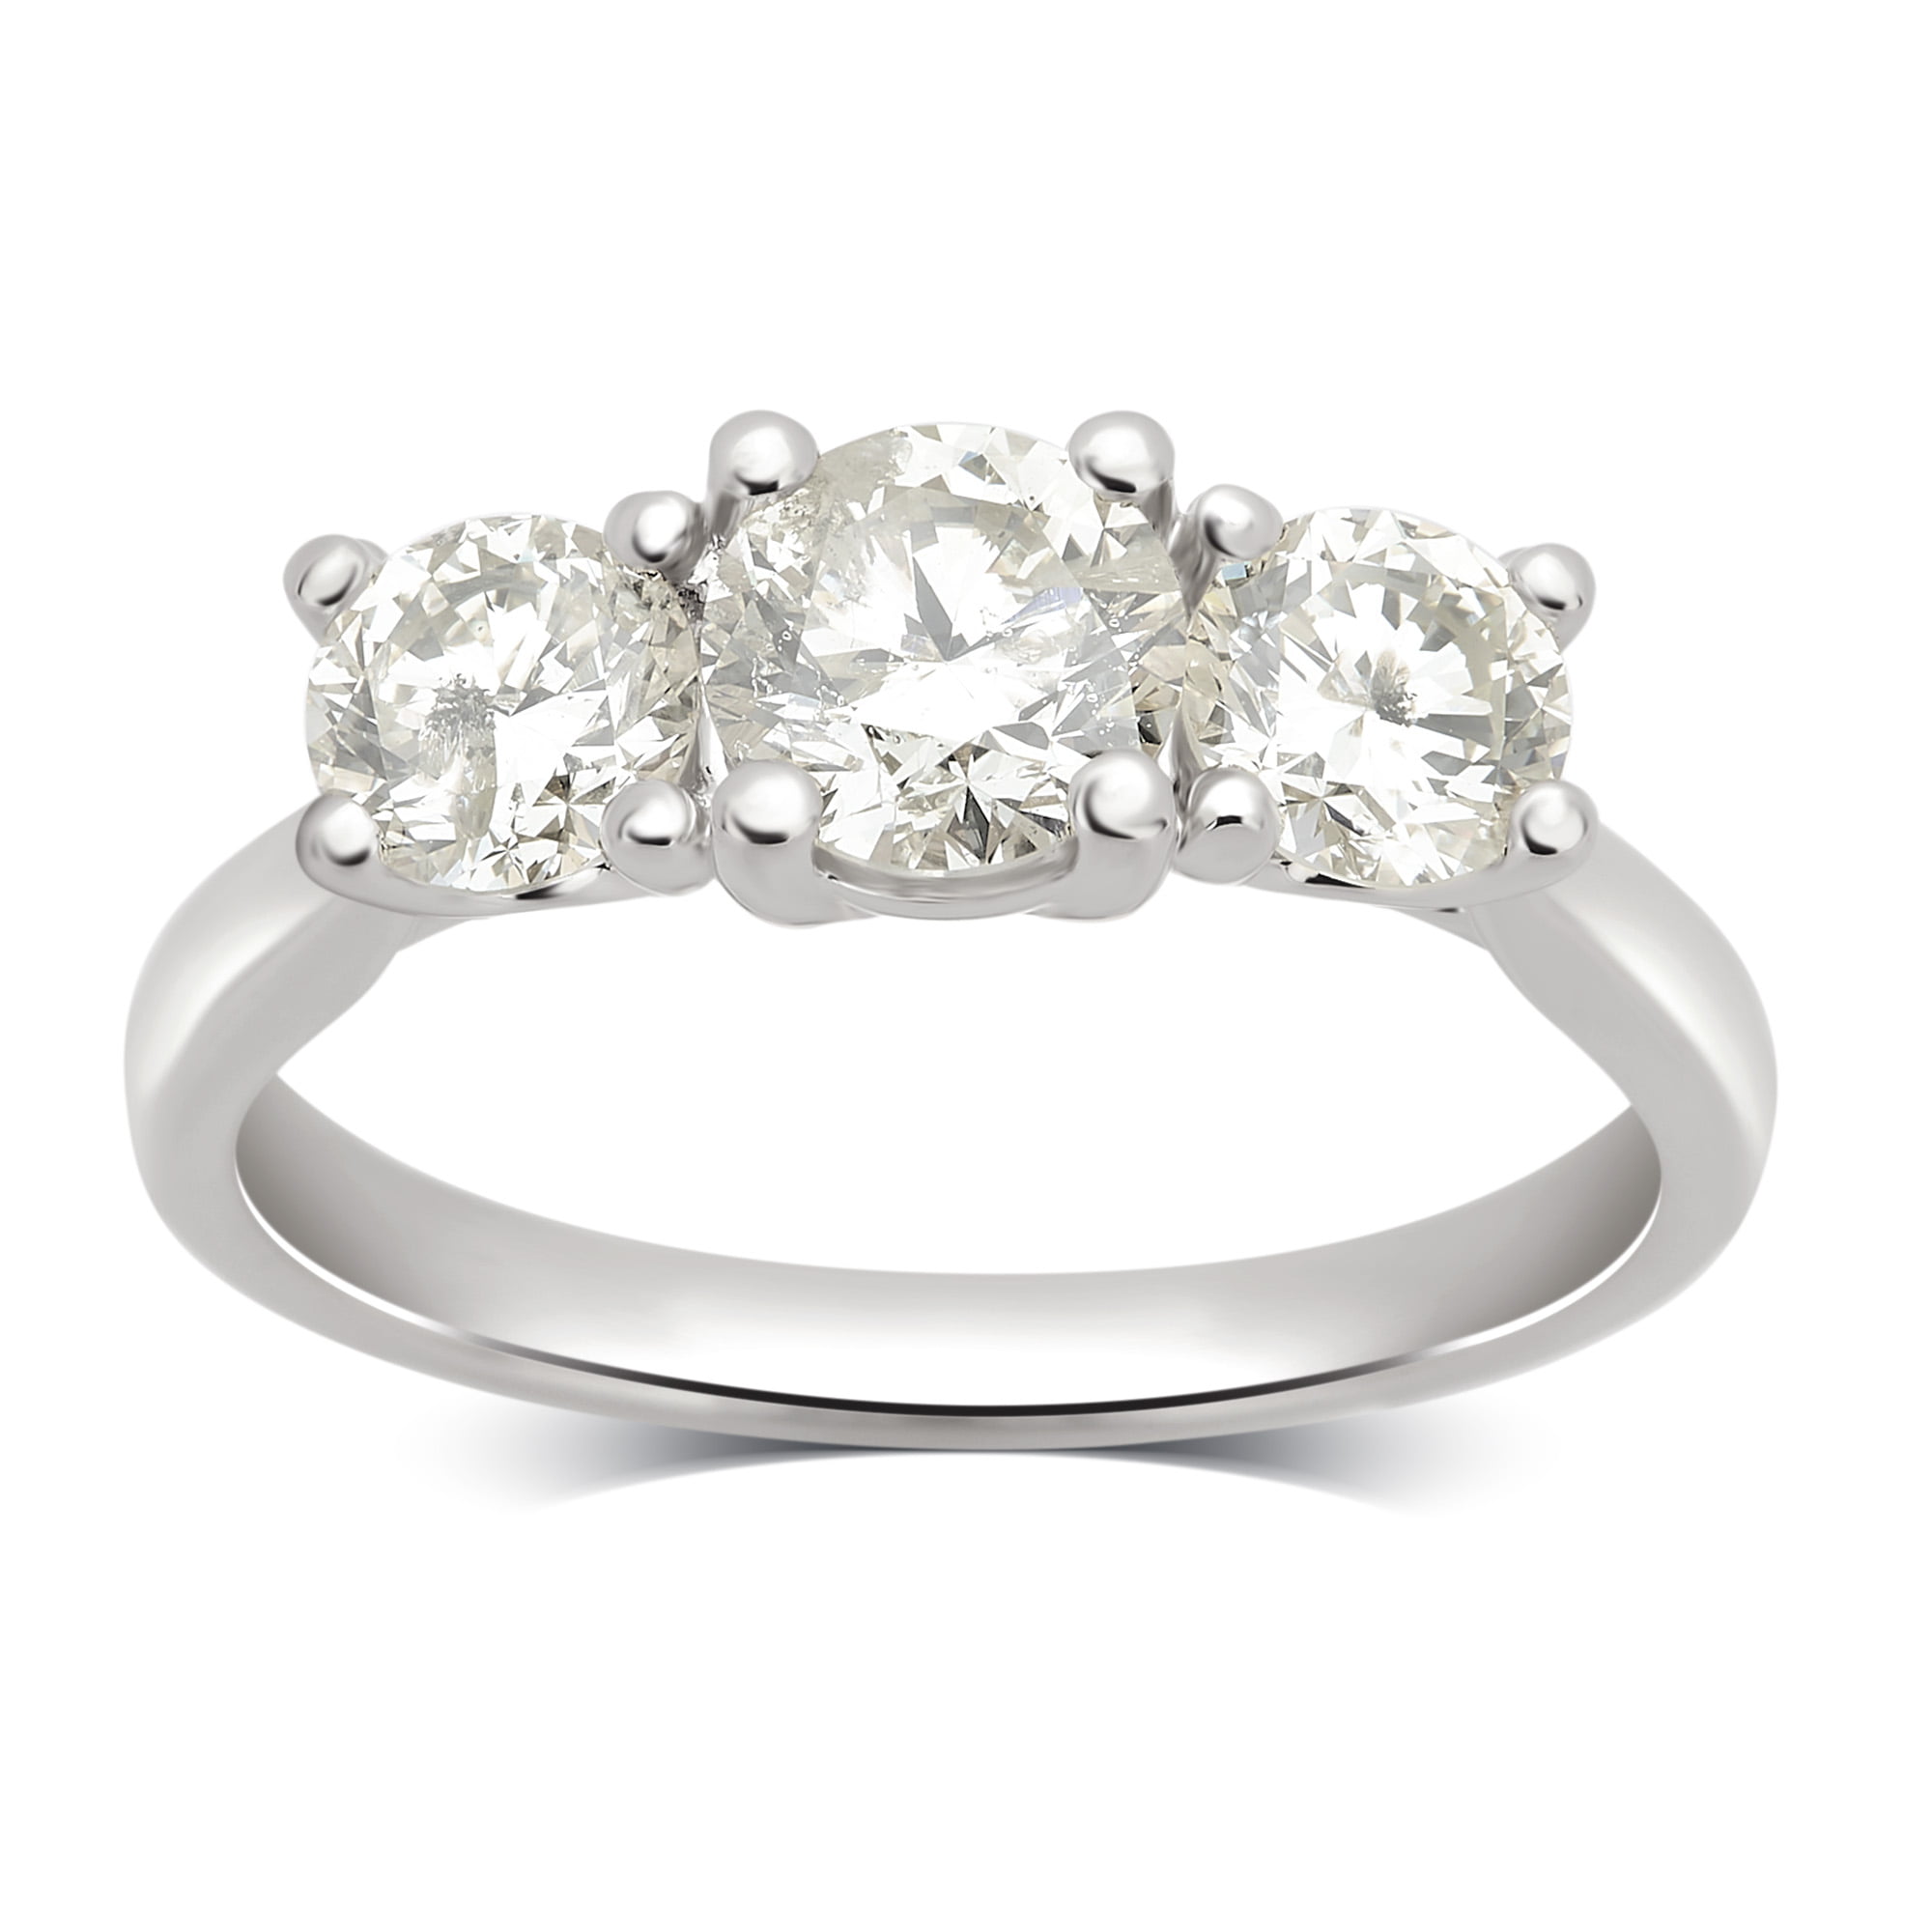 Wear Unique Vintage Engagement Ring | Wedding Bands & Co.